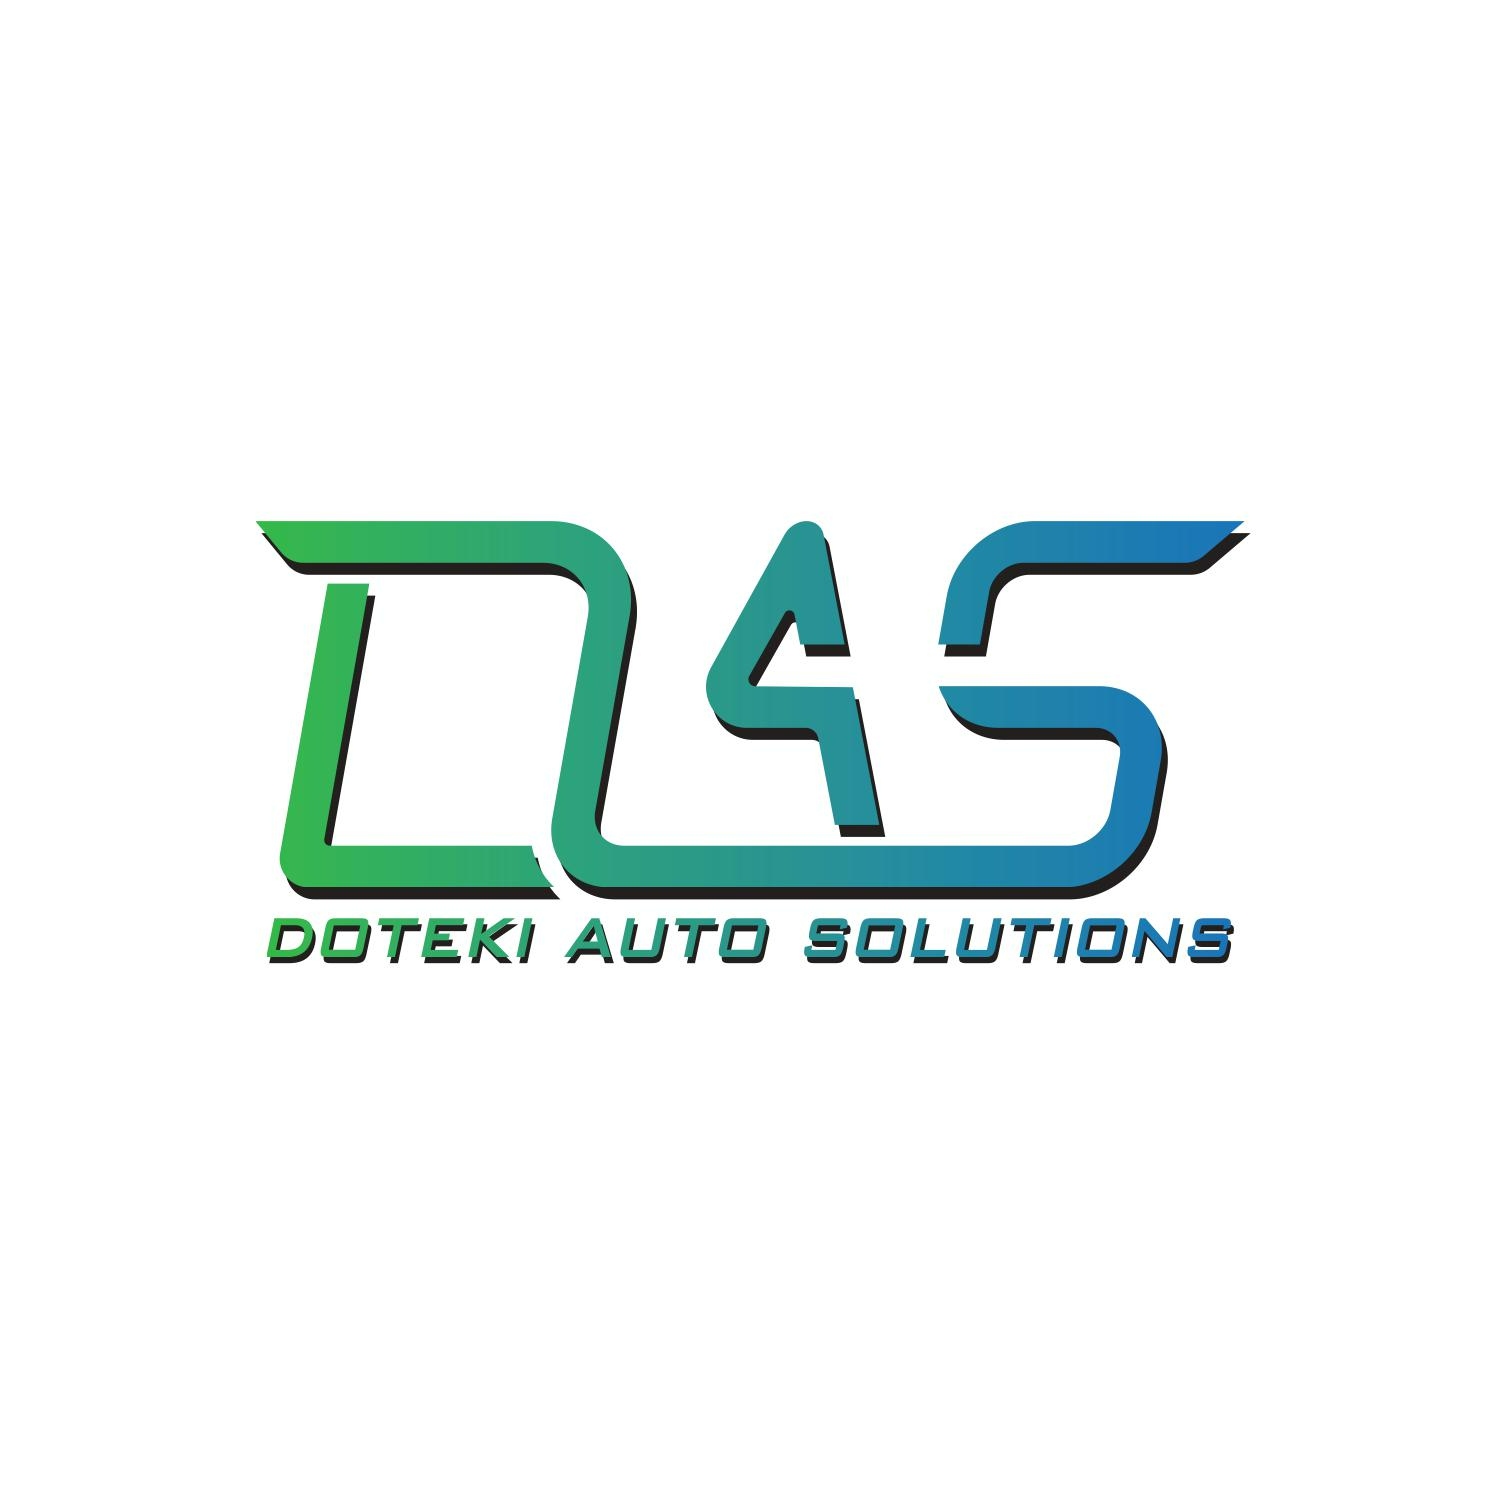 Doteki Auto Solutions